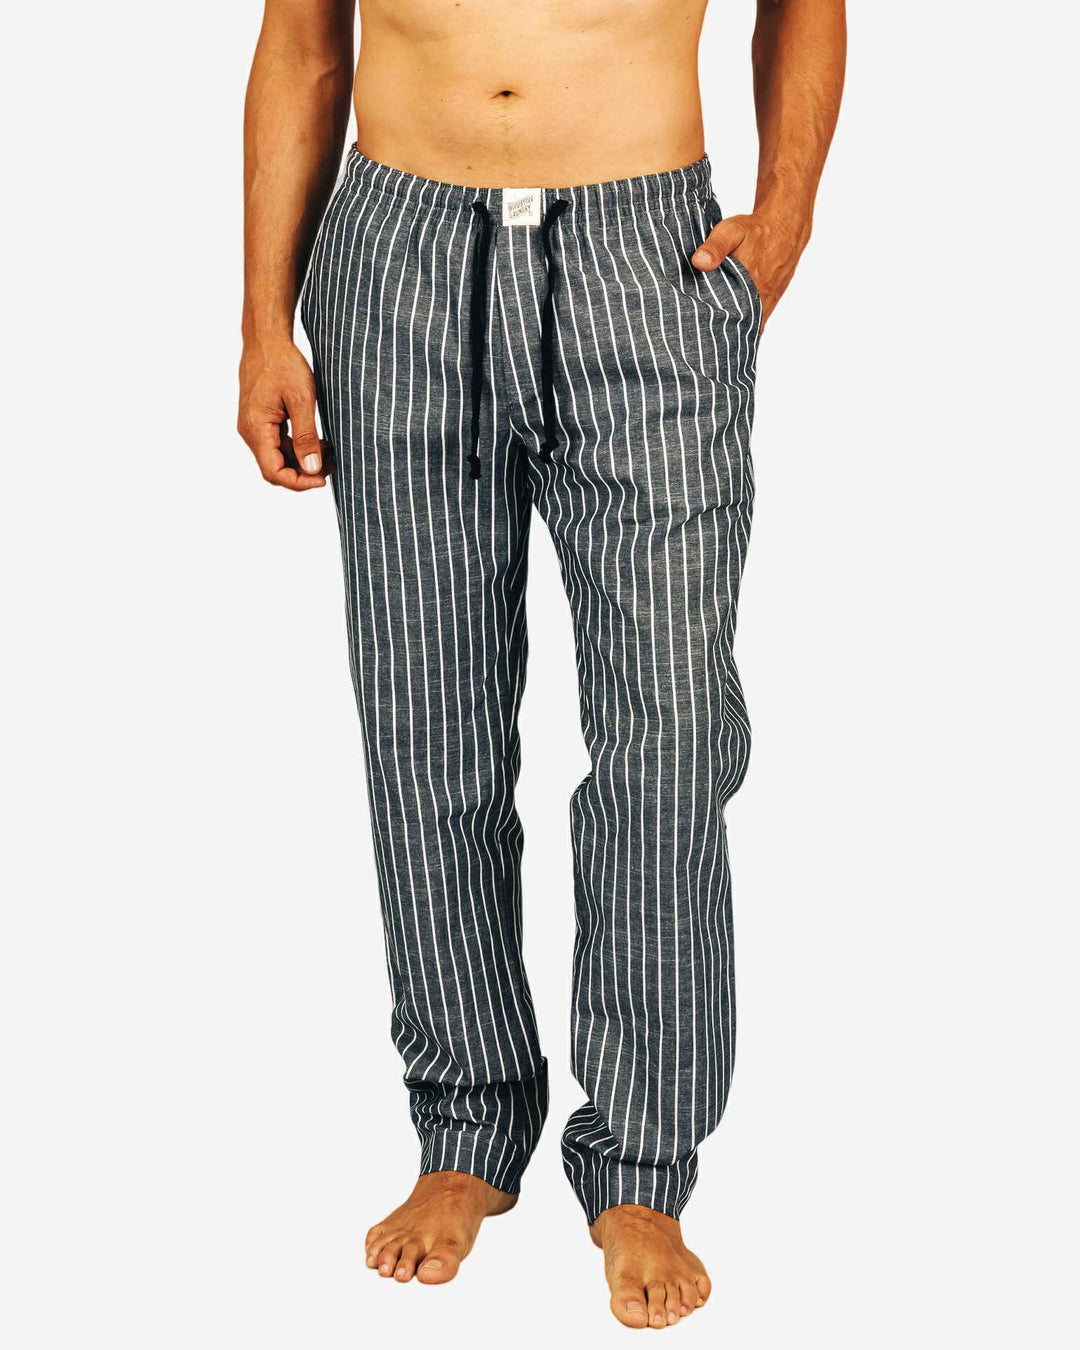 Mens pj pants - black and white stripes